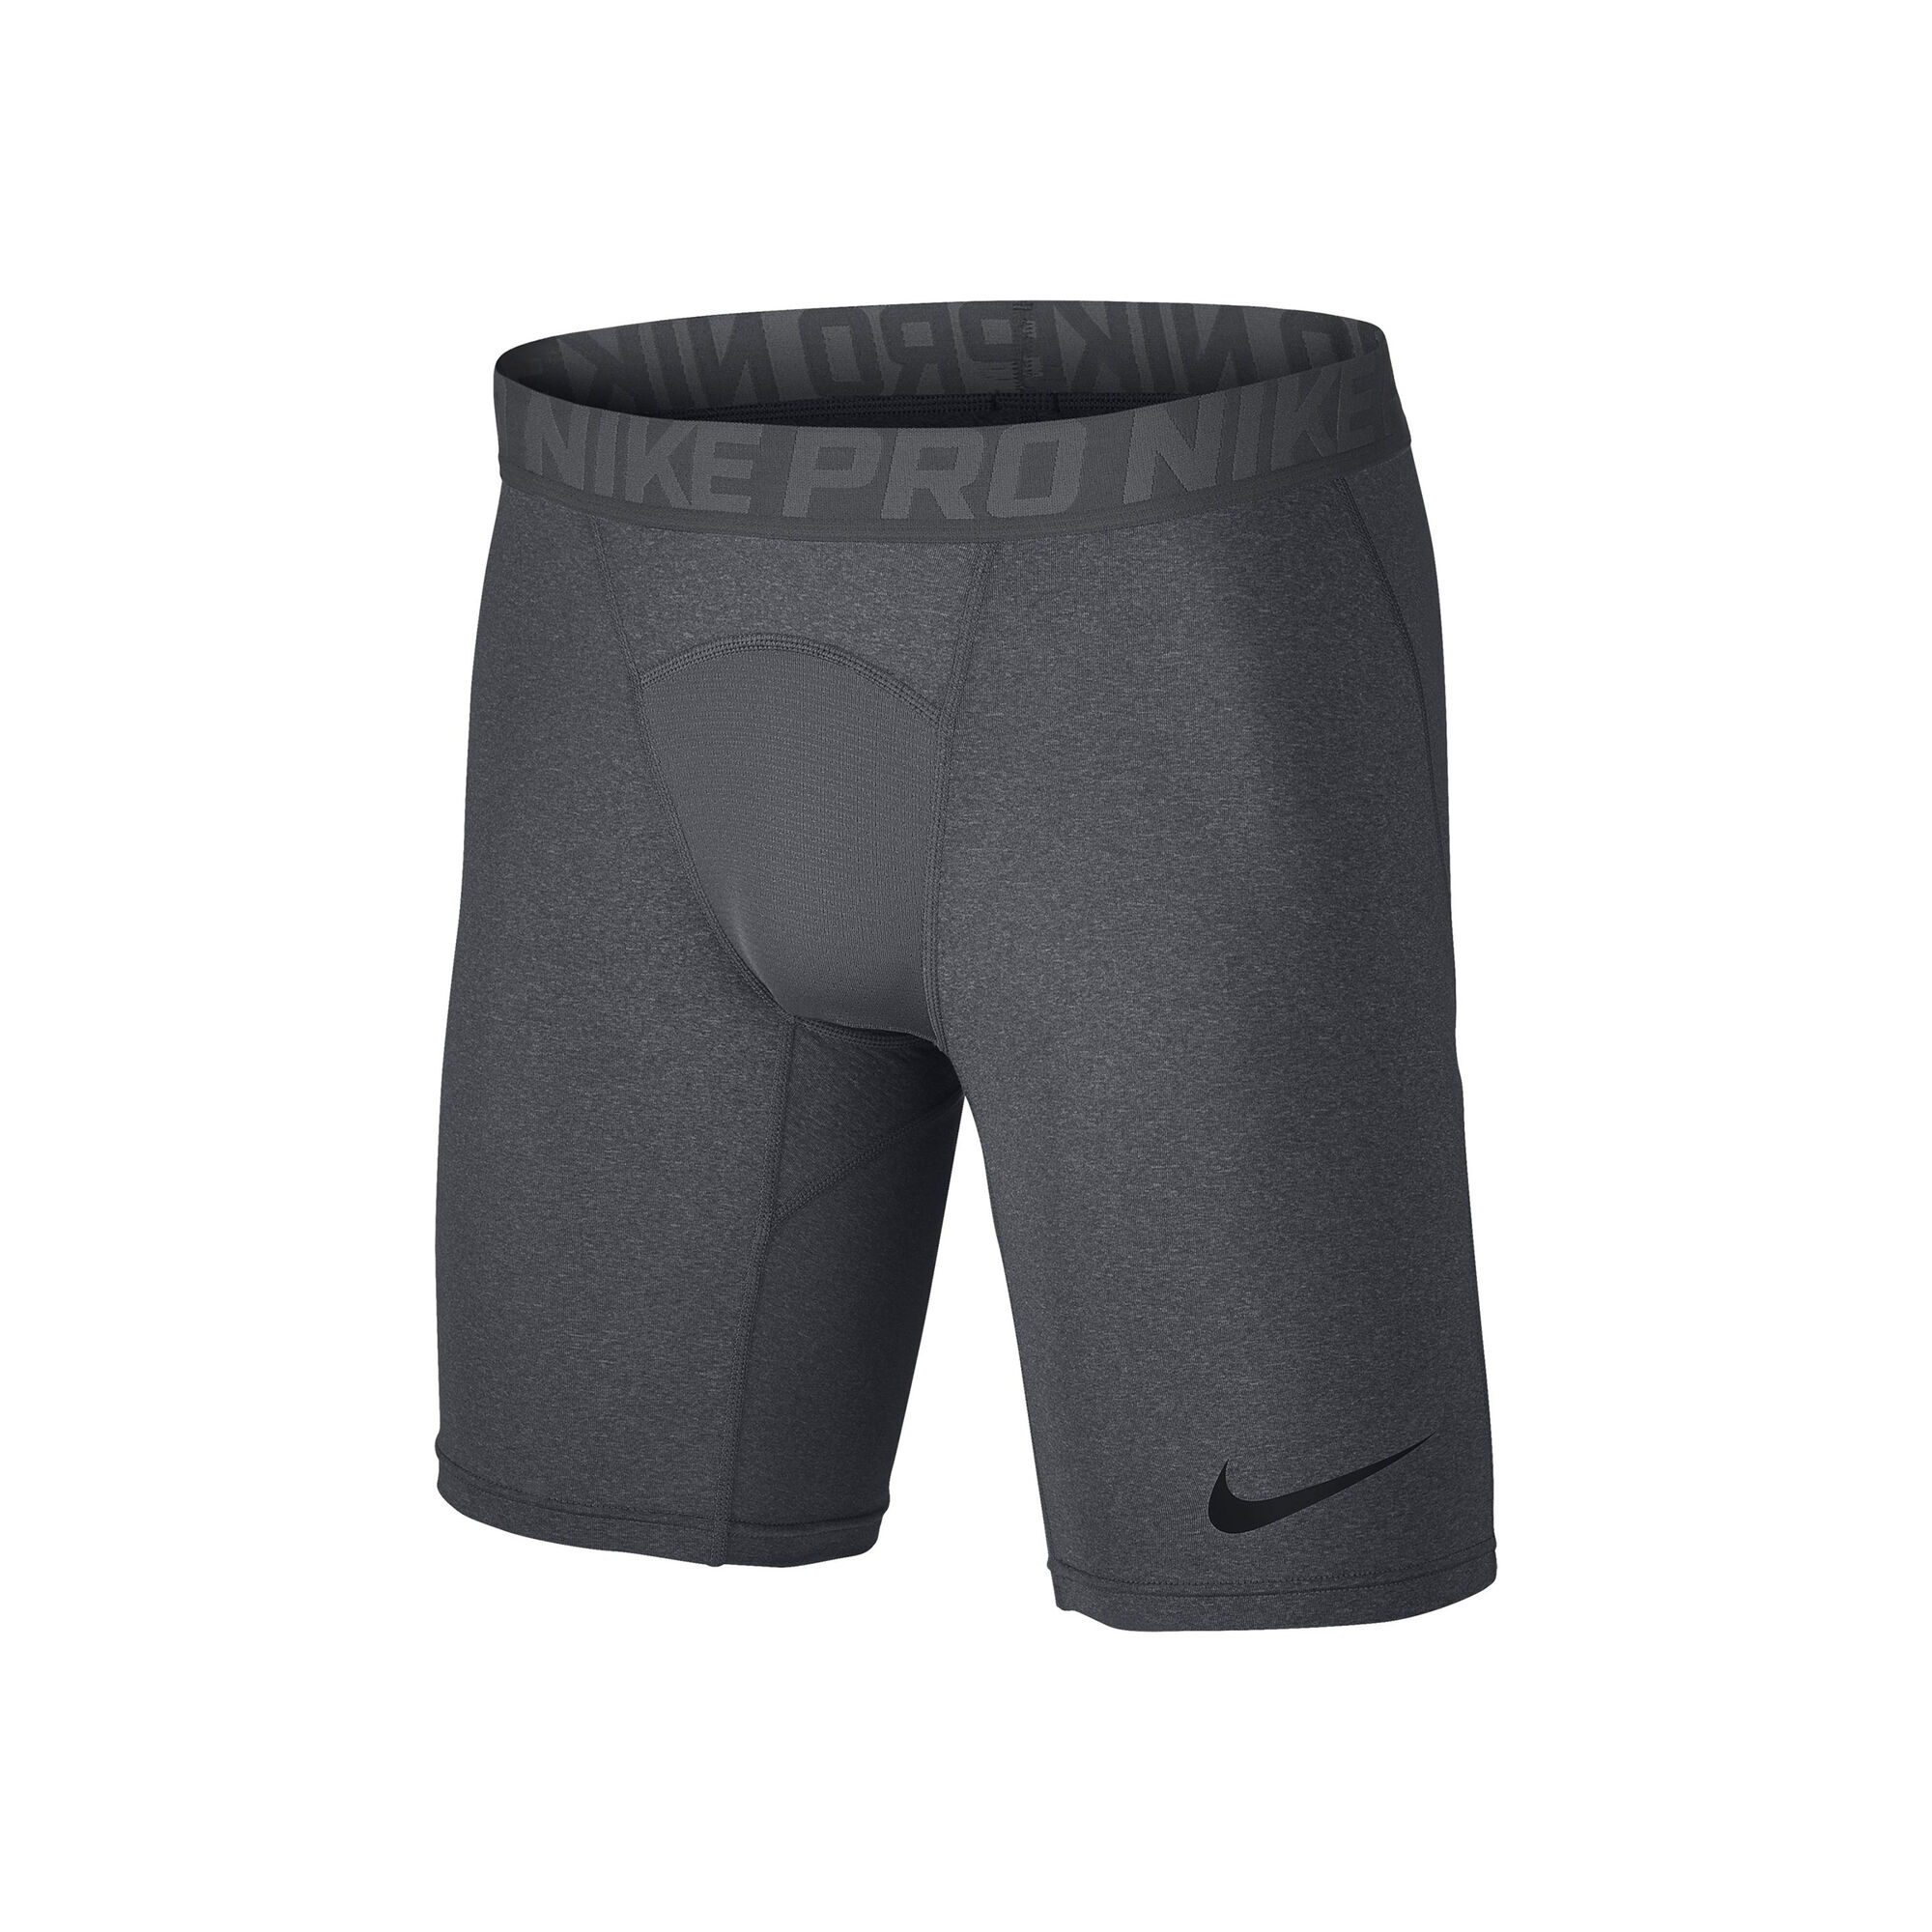 buy Nike Pro Boxer Shorts Men - Dark Grey, Black online | Tennis-Point